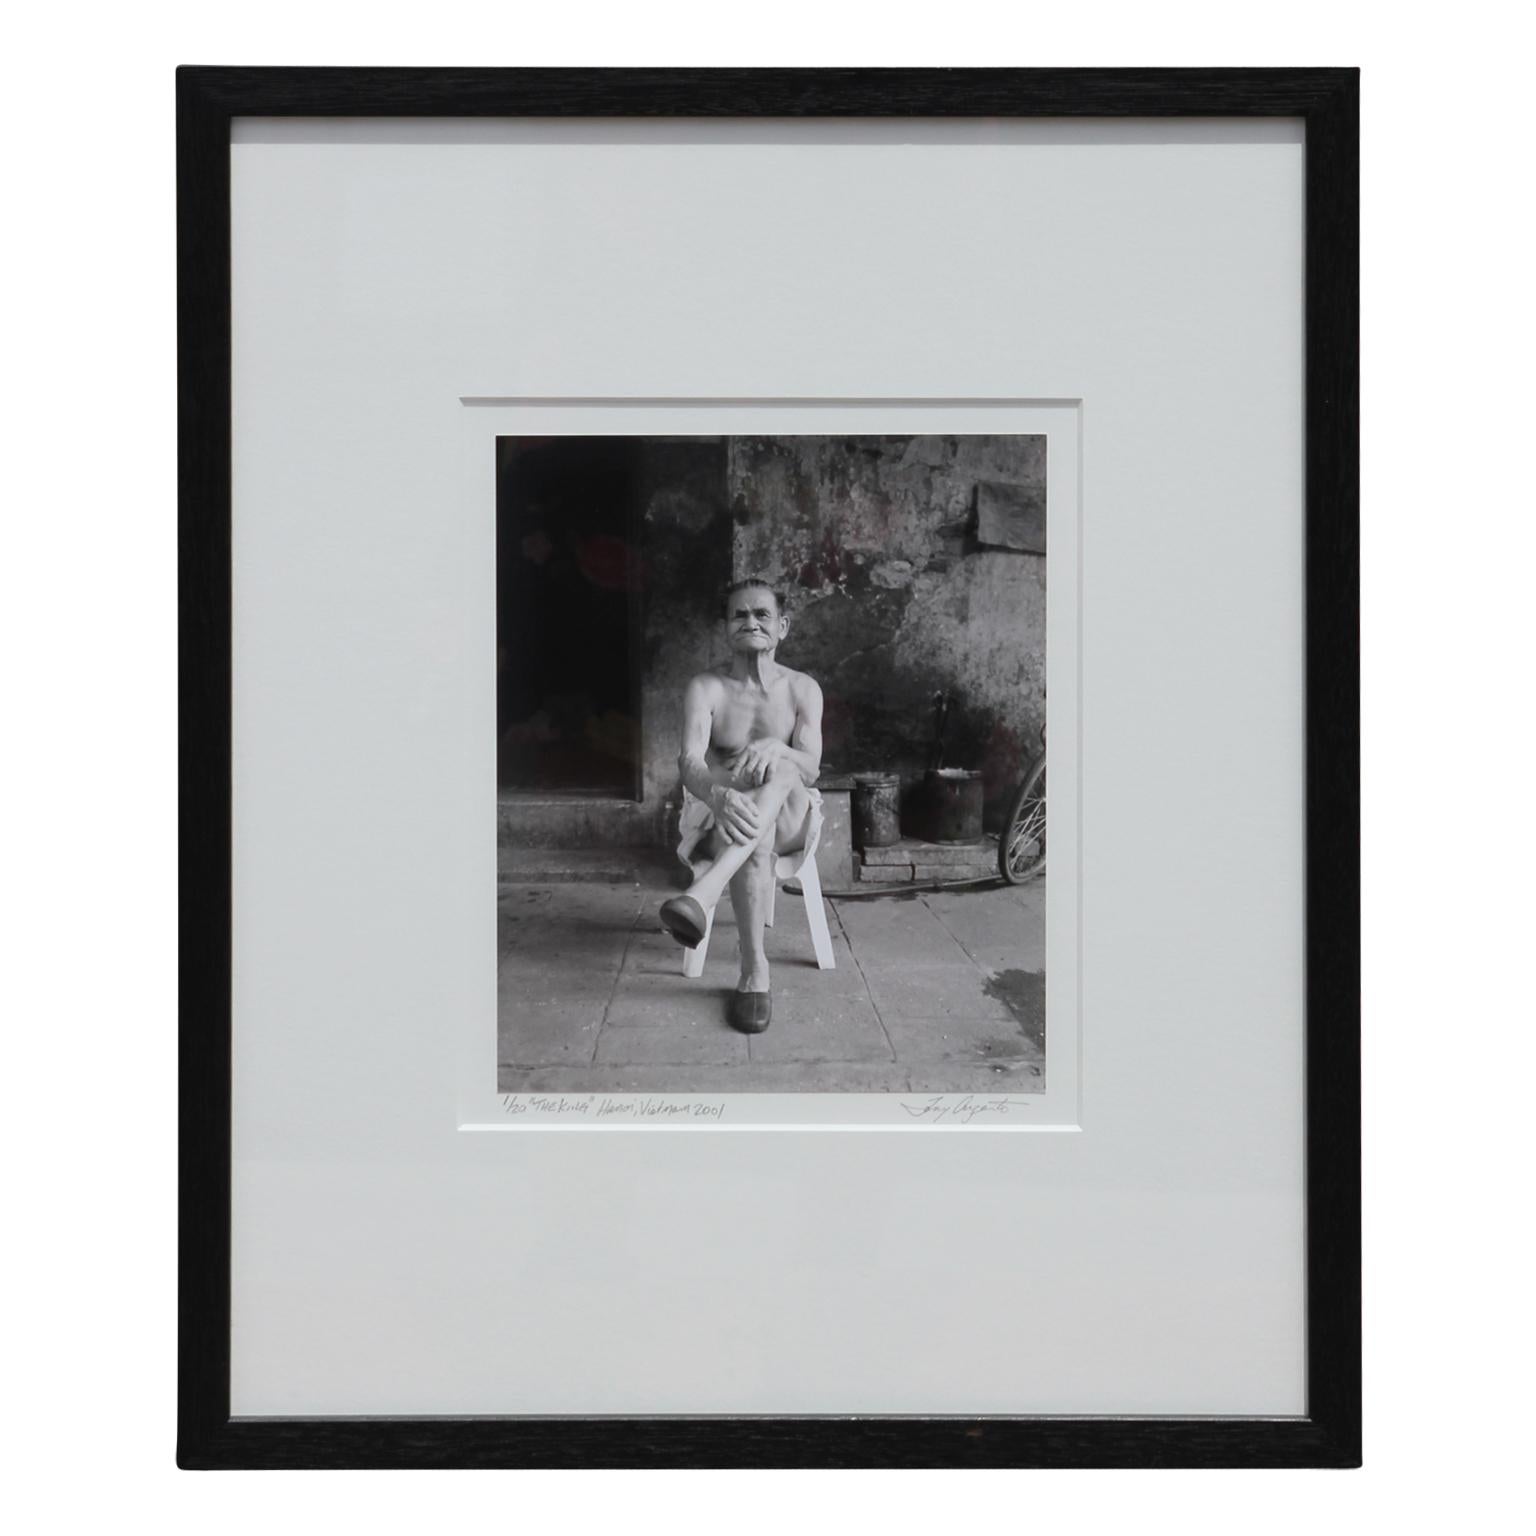 Tony Argento Figurative Photograph - "The King" Ha Noi, Vietnam Black and White Photograph